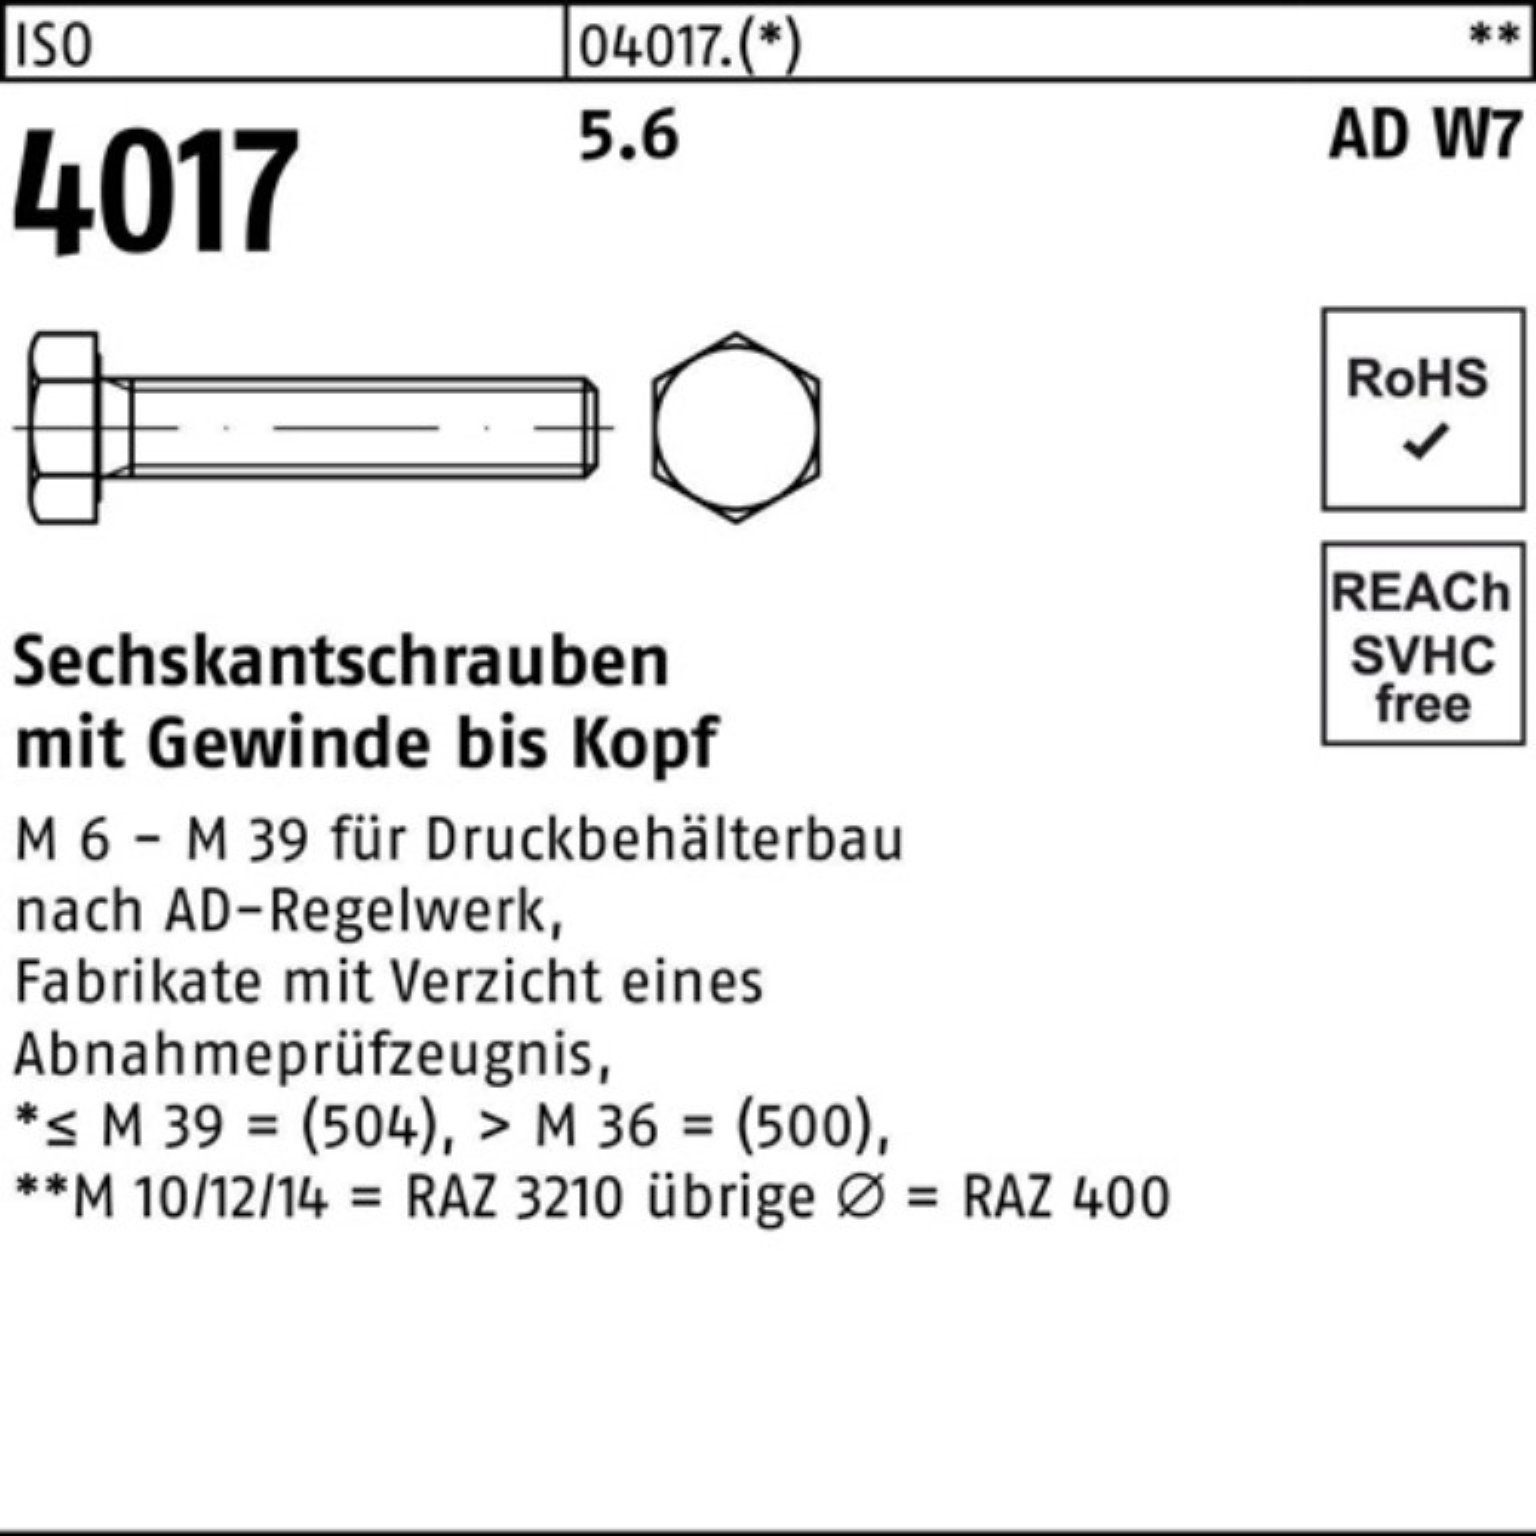 Bufab Sechskantschraube 100er Pack Sechskantschraube ISO 4017 VG M12x 45 5.6 AD W7 100 Stück